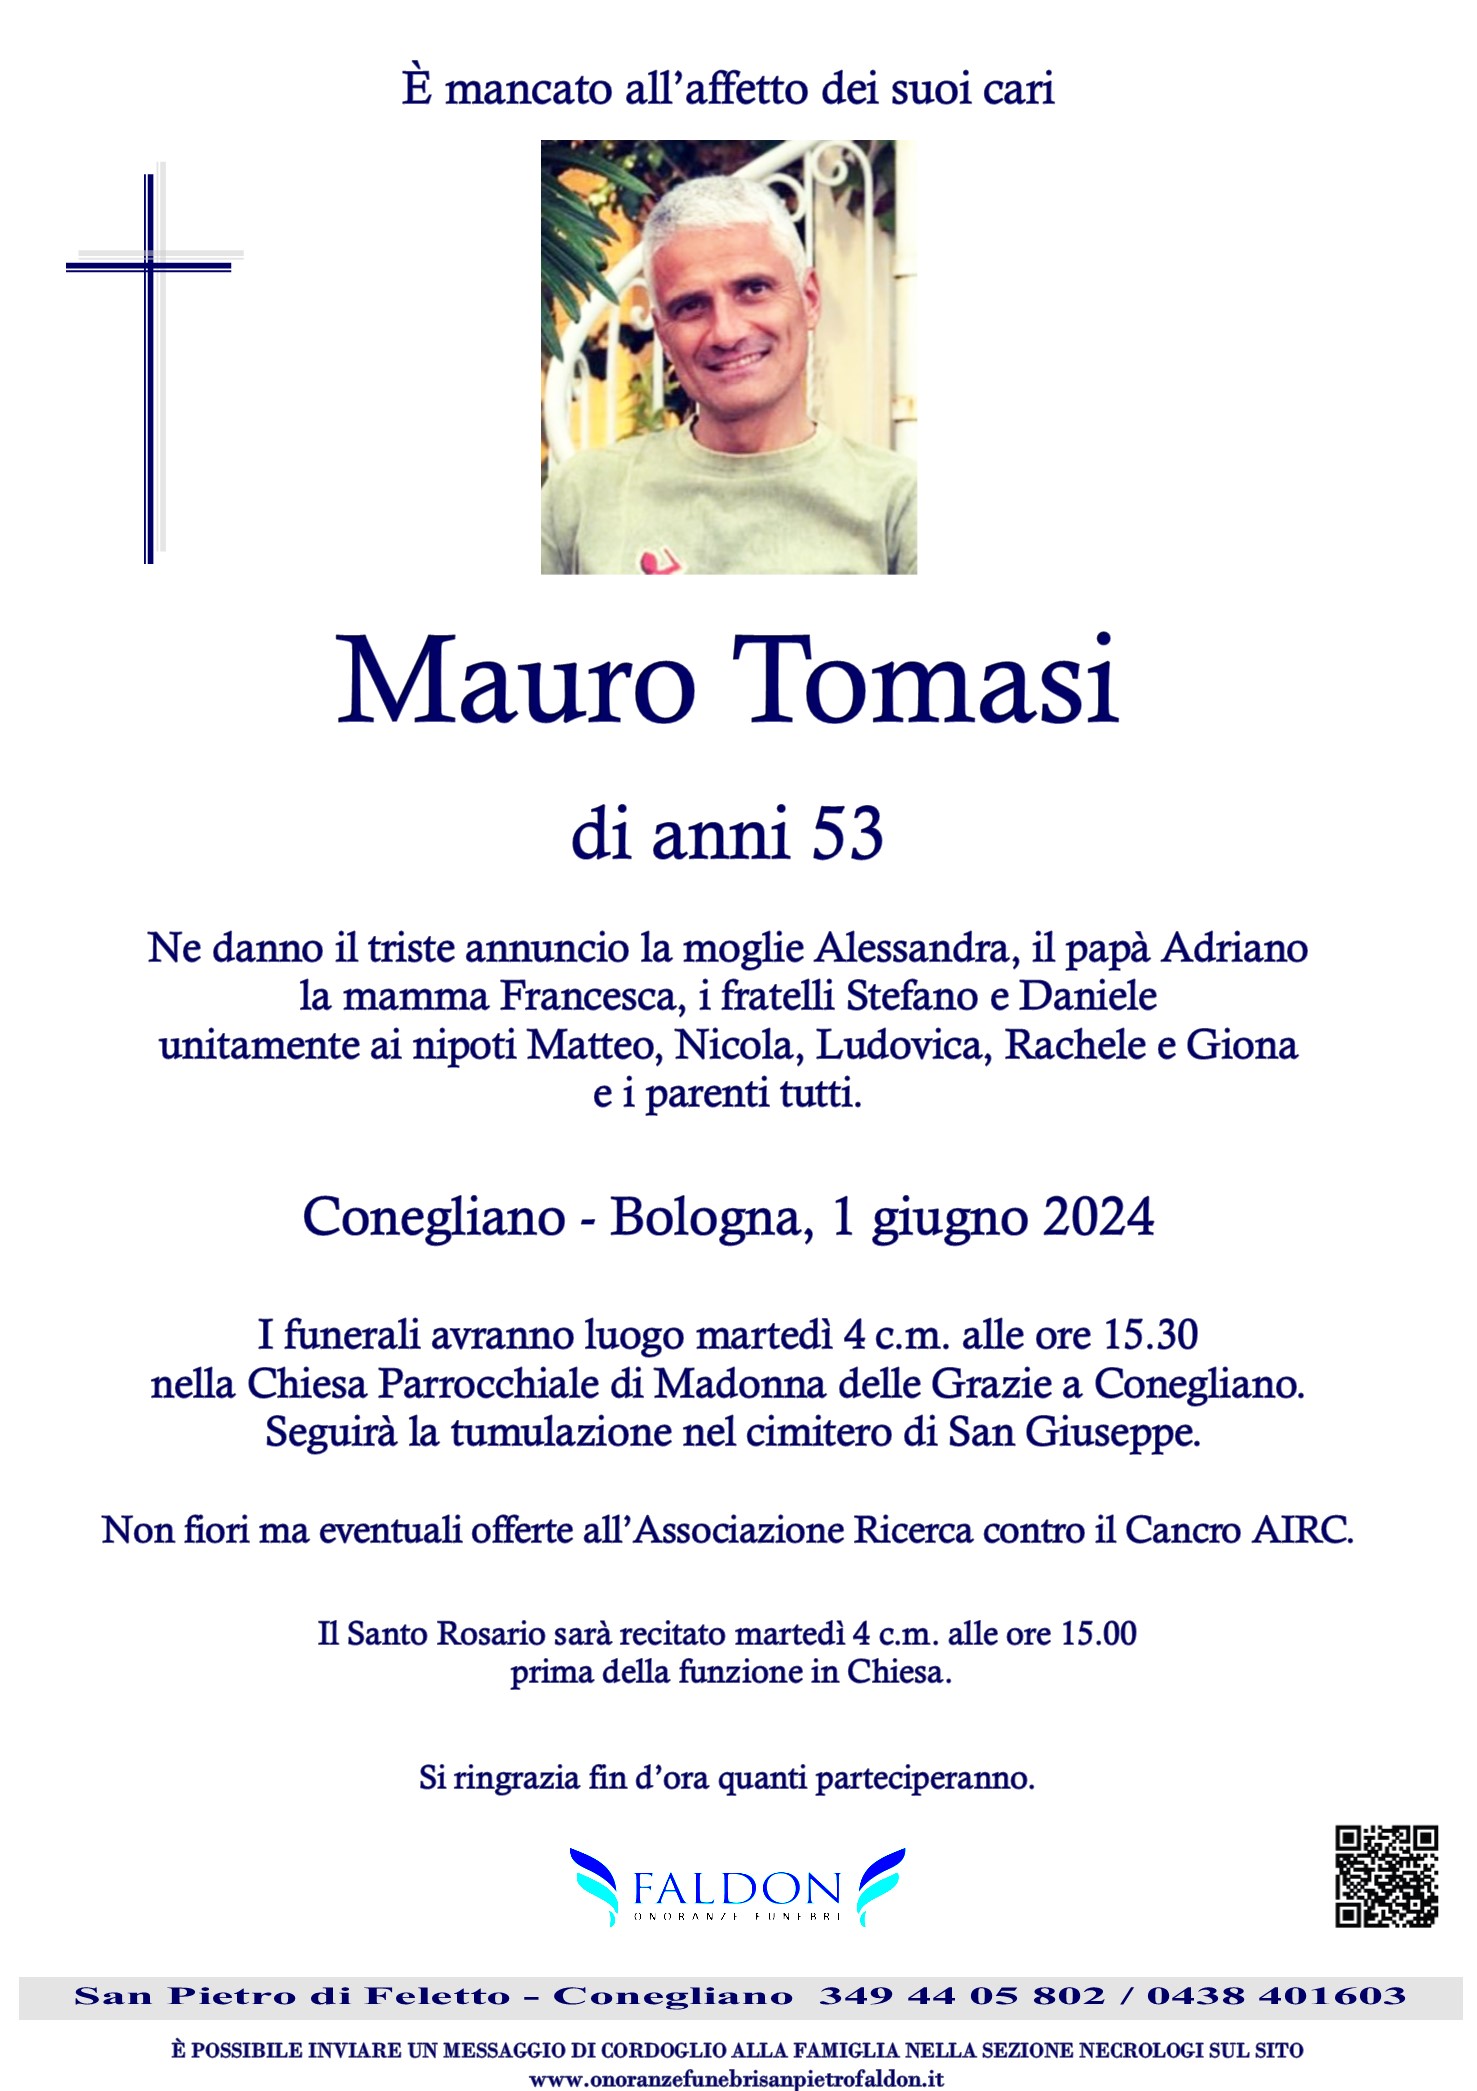 Mauro Tomasi